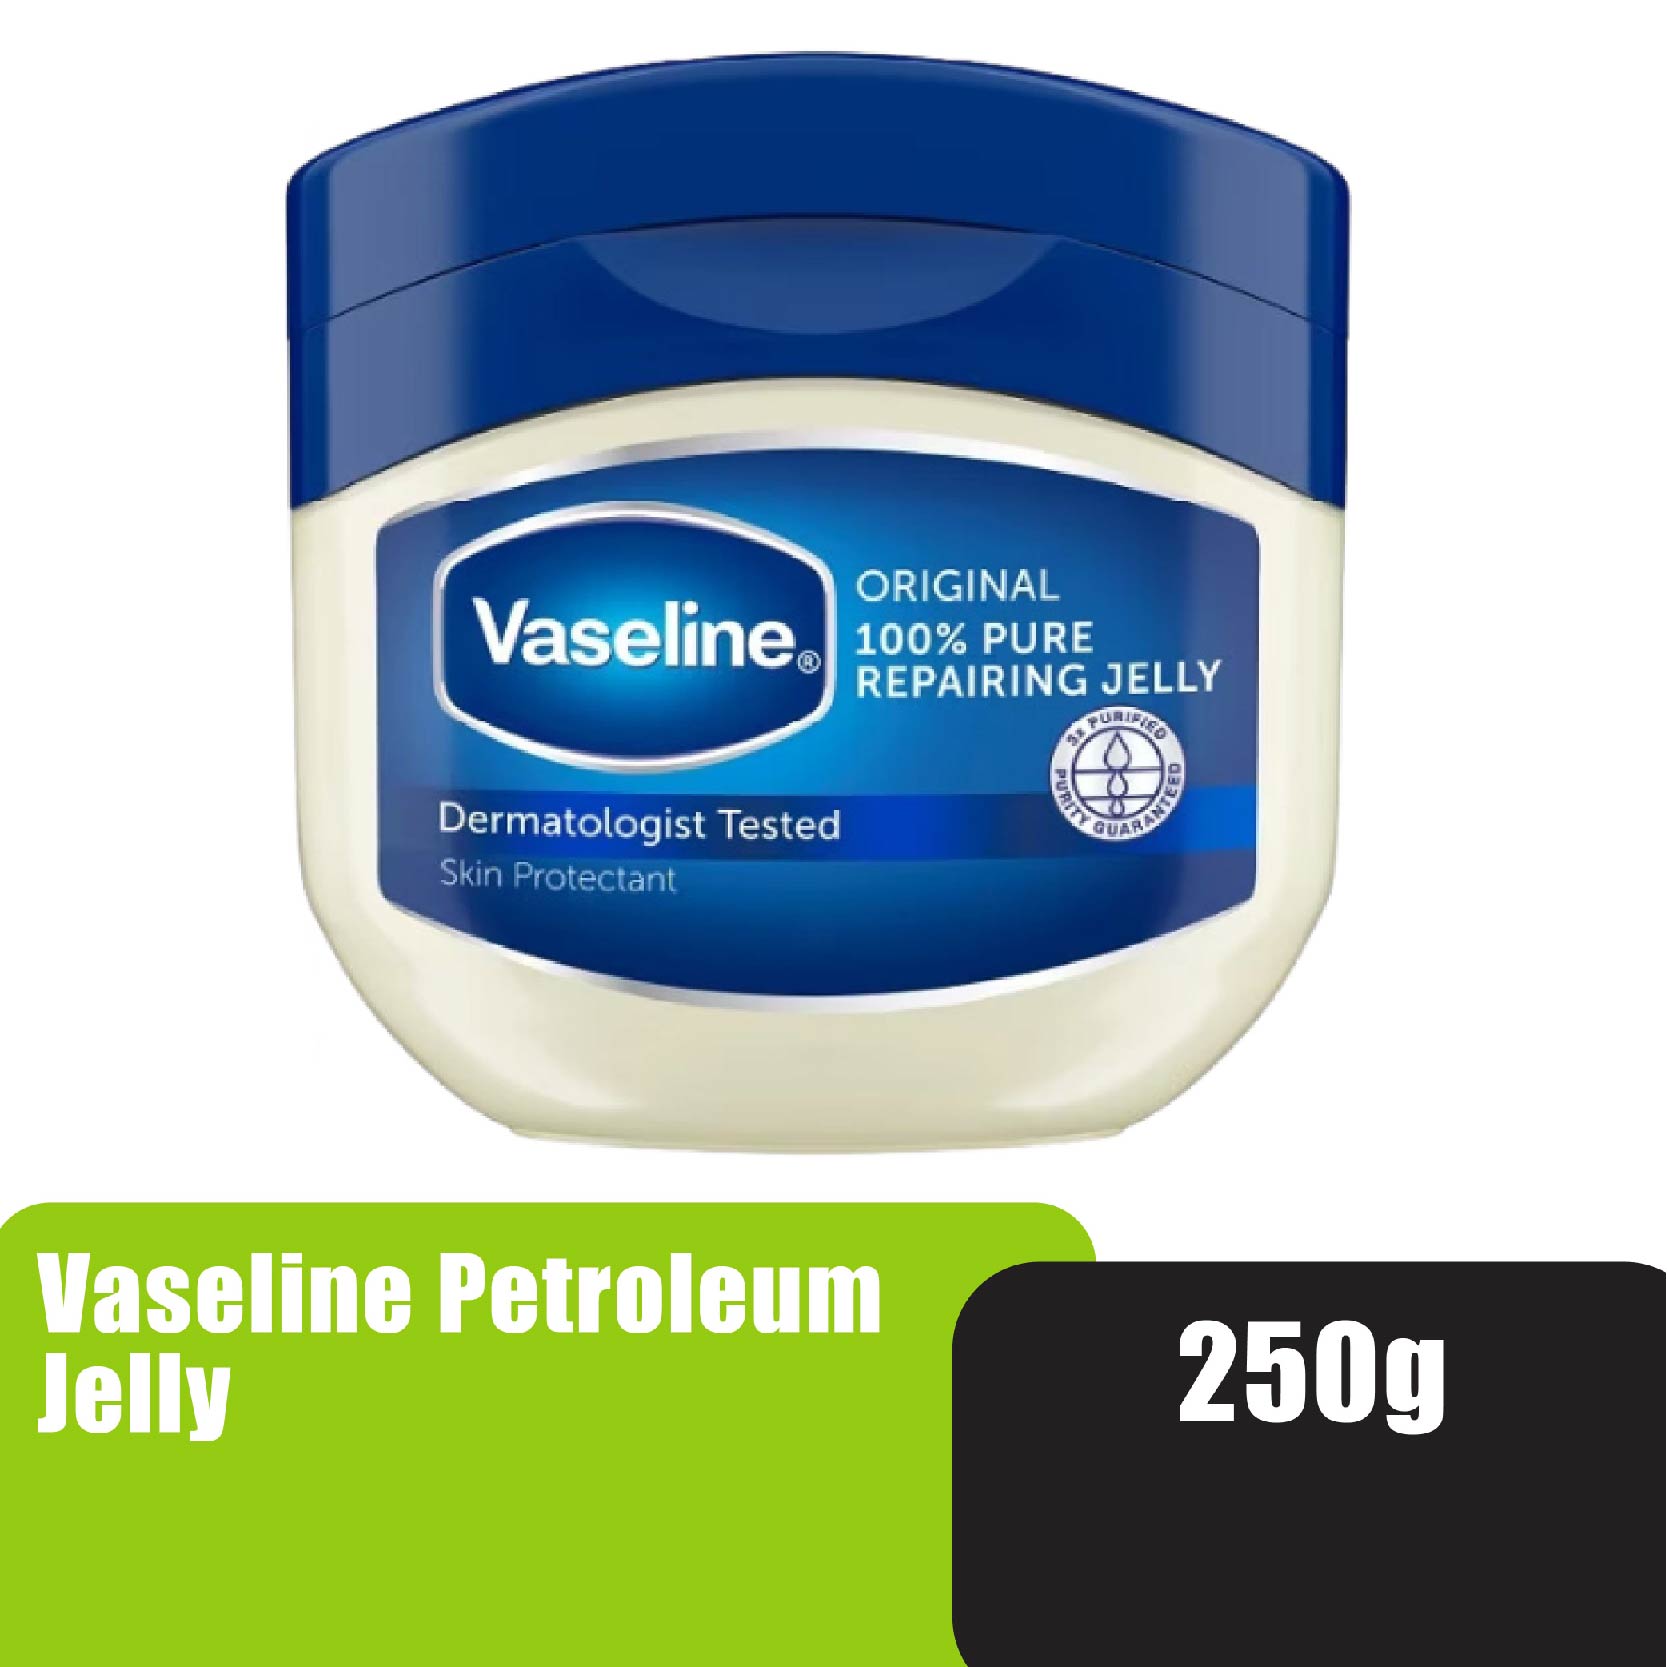 Vaseline Original 100% Pure Repairing Jelly 250g